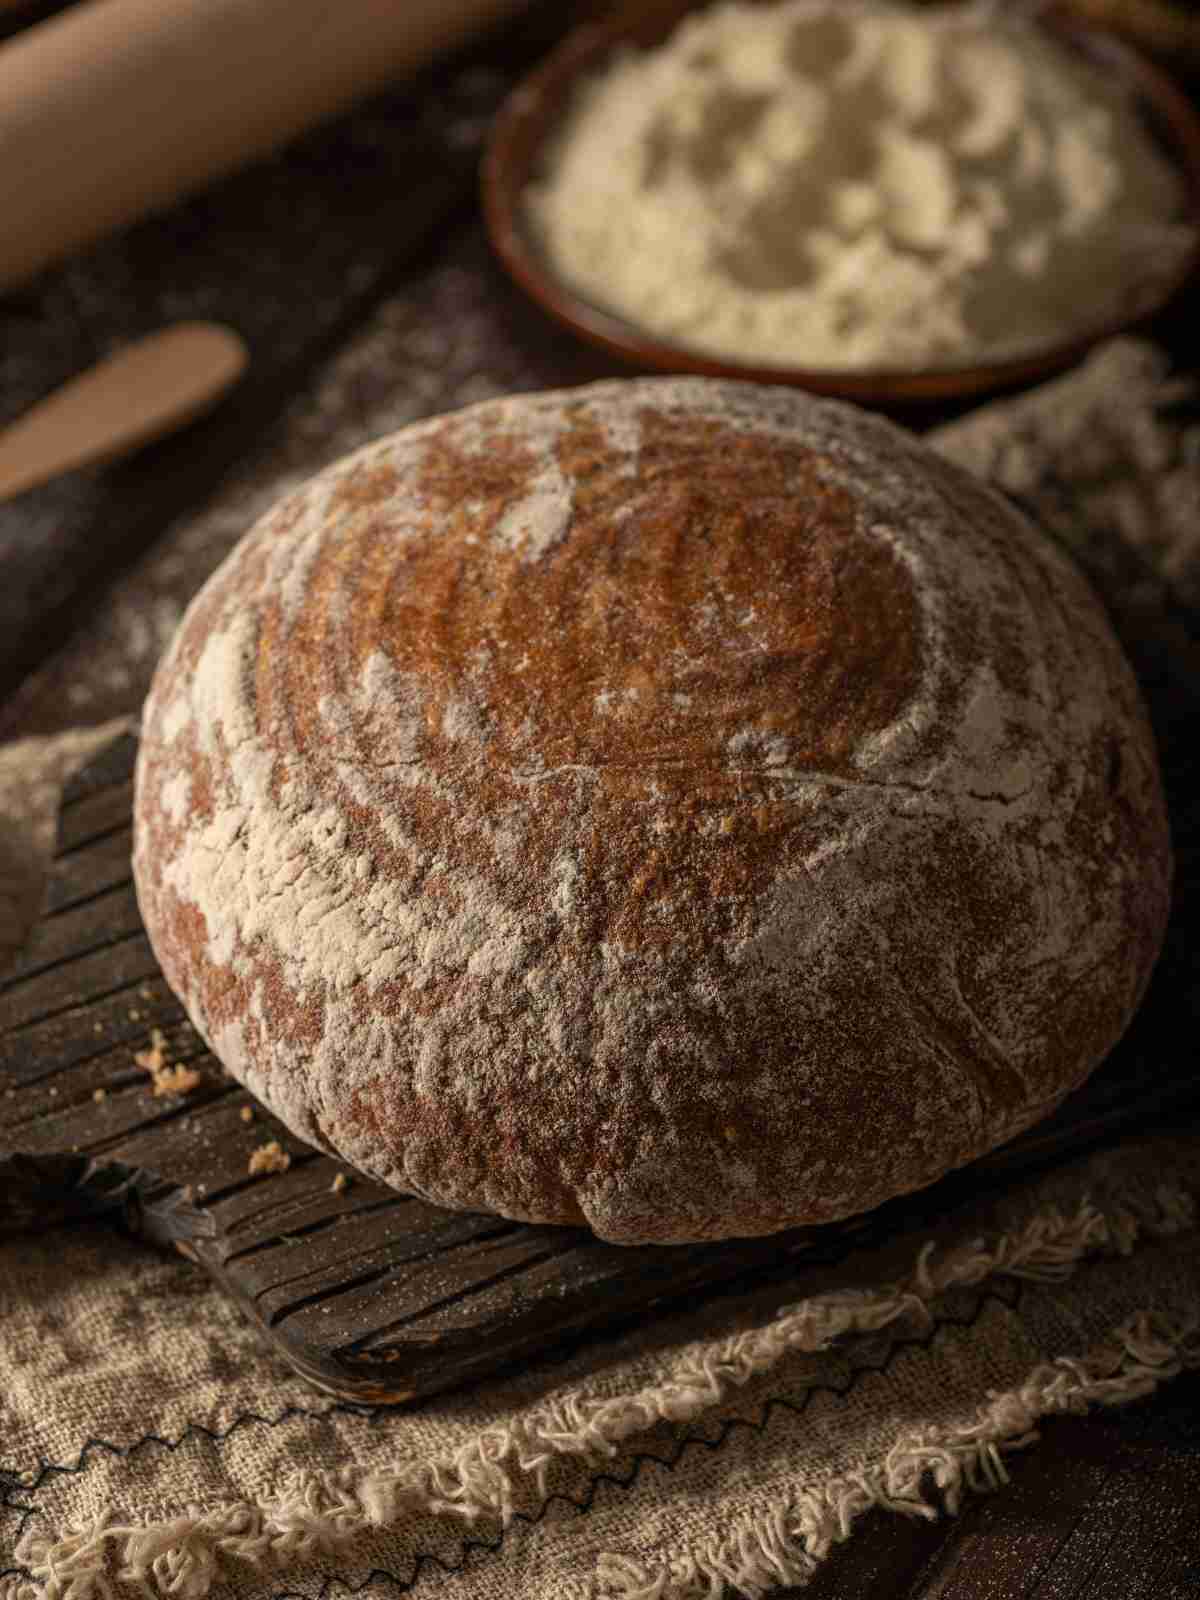 Health Benefits of Sourdough Bread